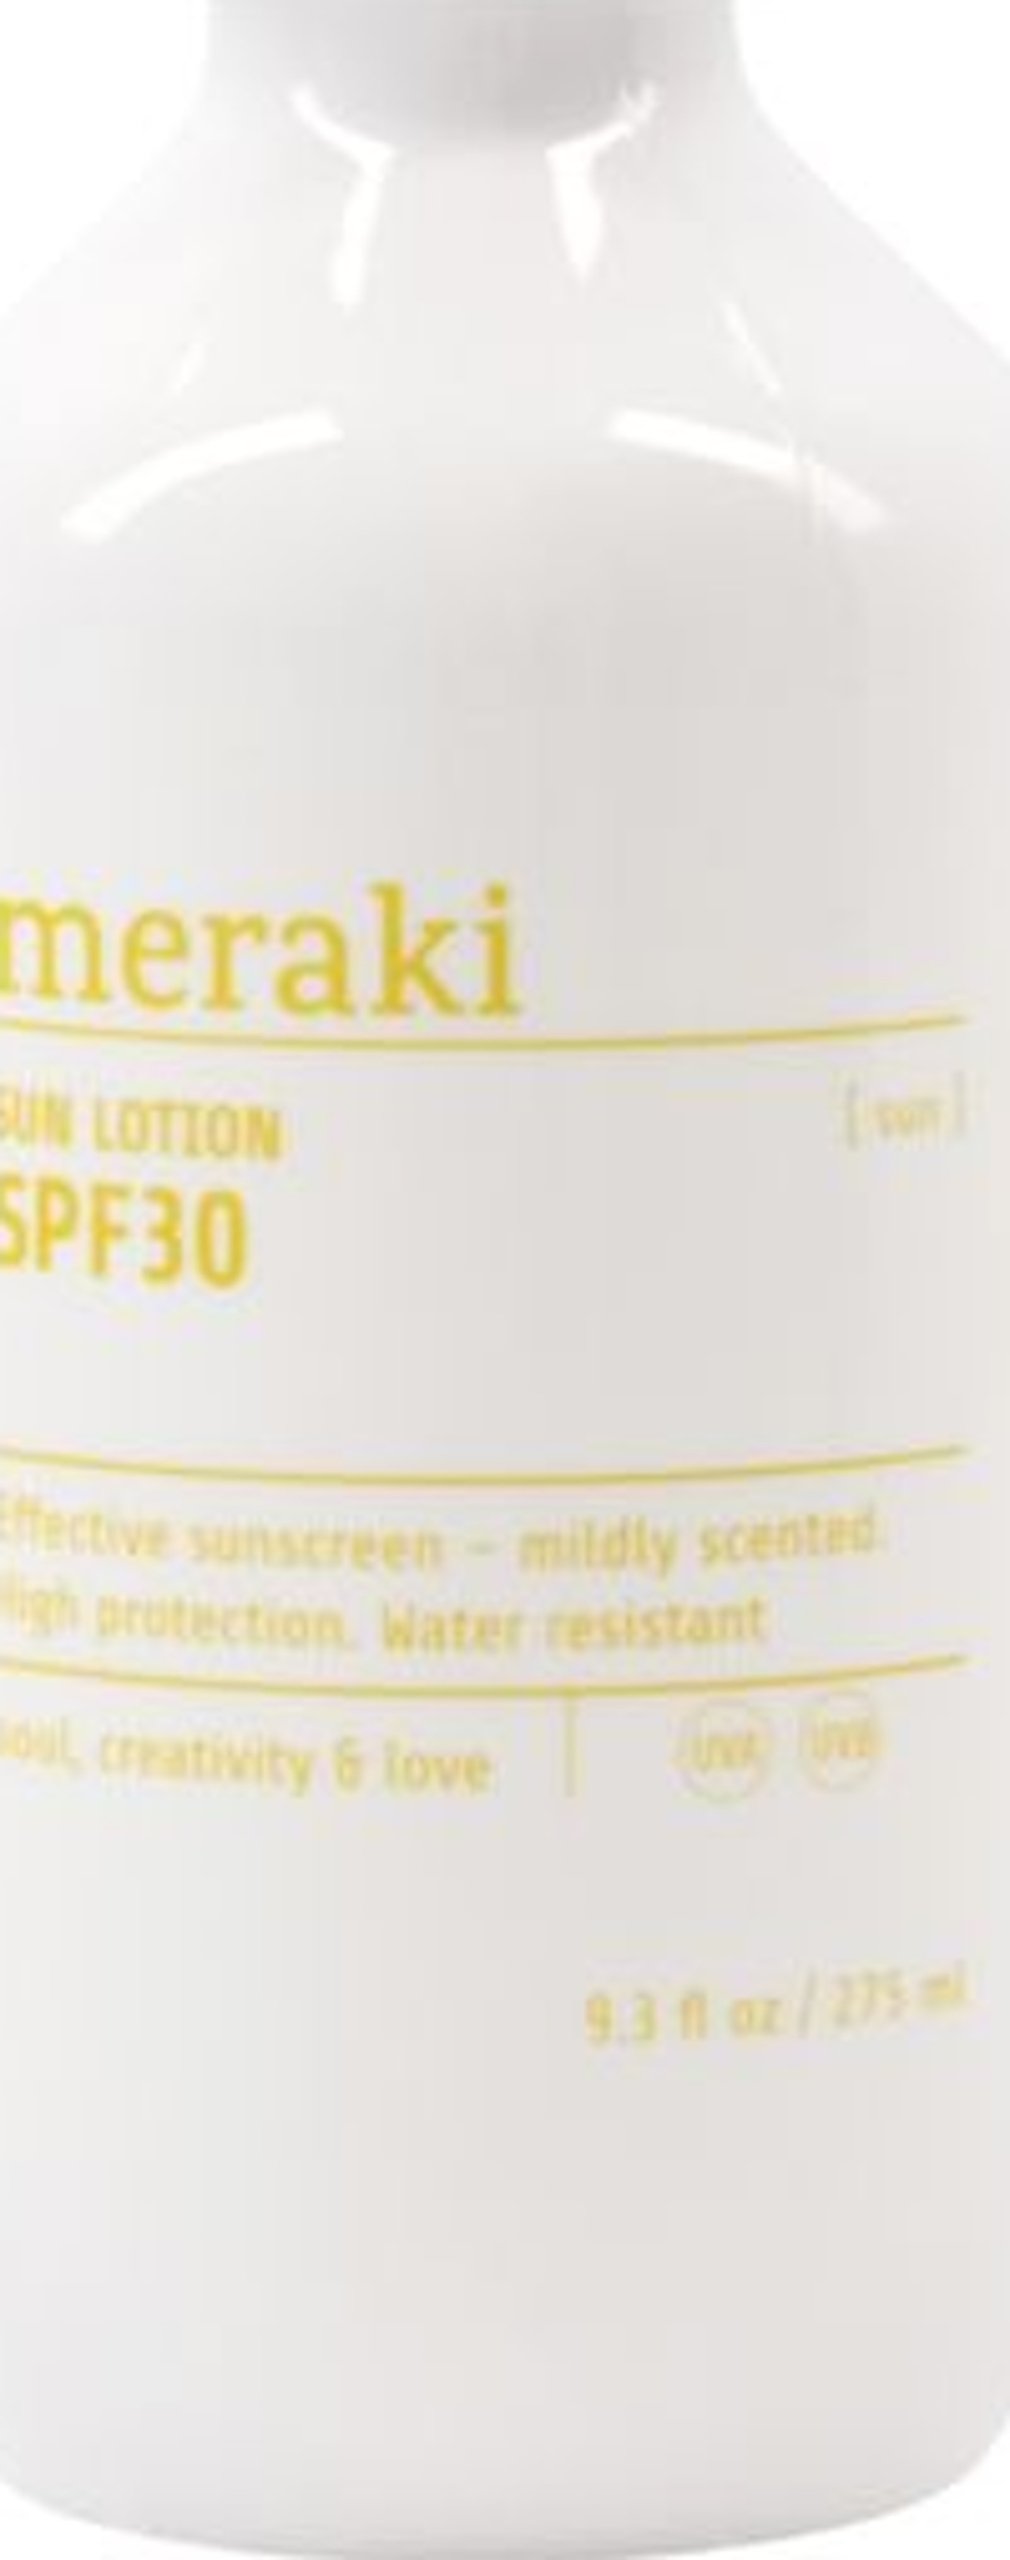 På billedet ser du Mildly scented, Sun lotion fra brandet Meraki i en størrelse D: 6 cm. x H: 16 cm. i farven Hvid/Gul